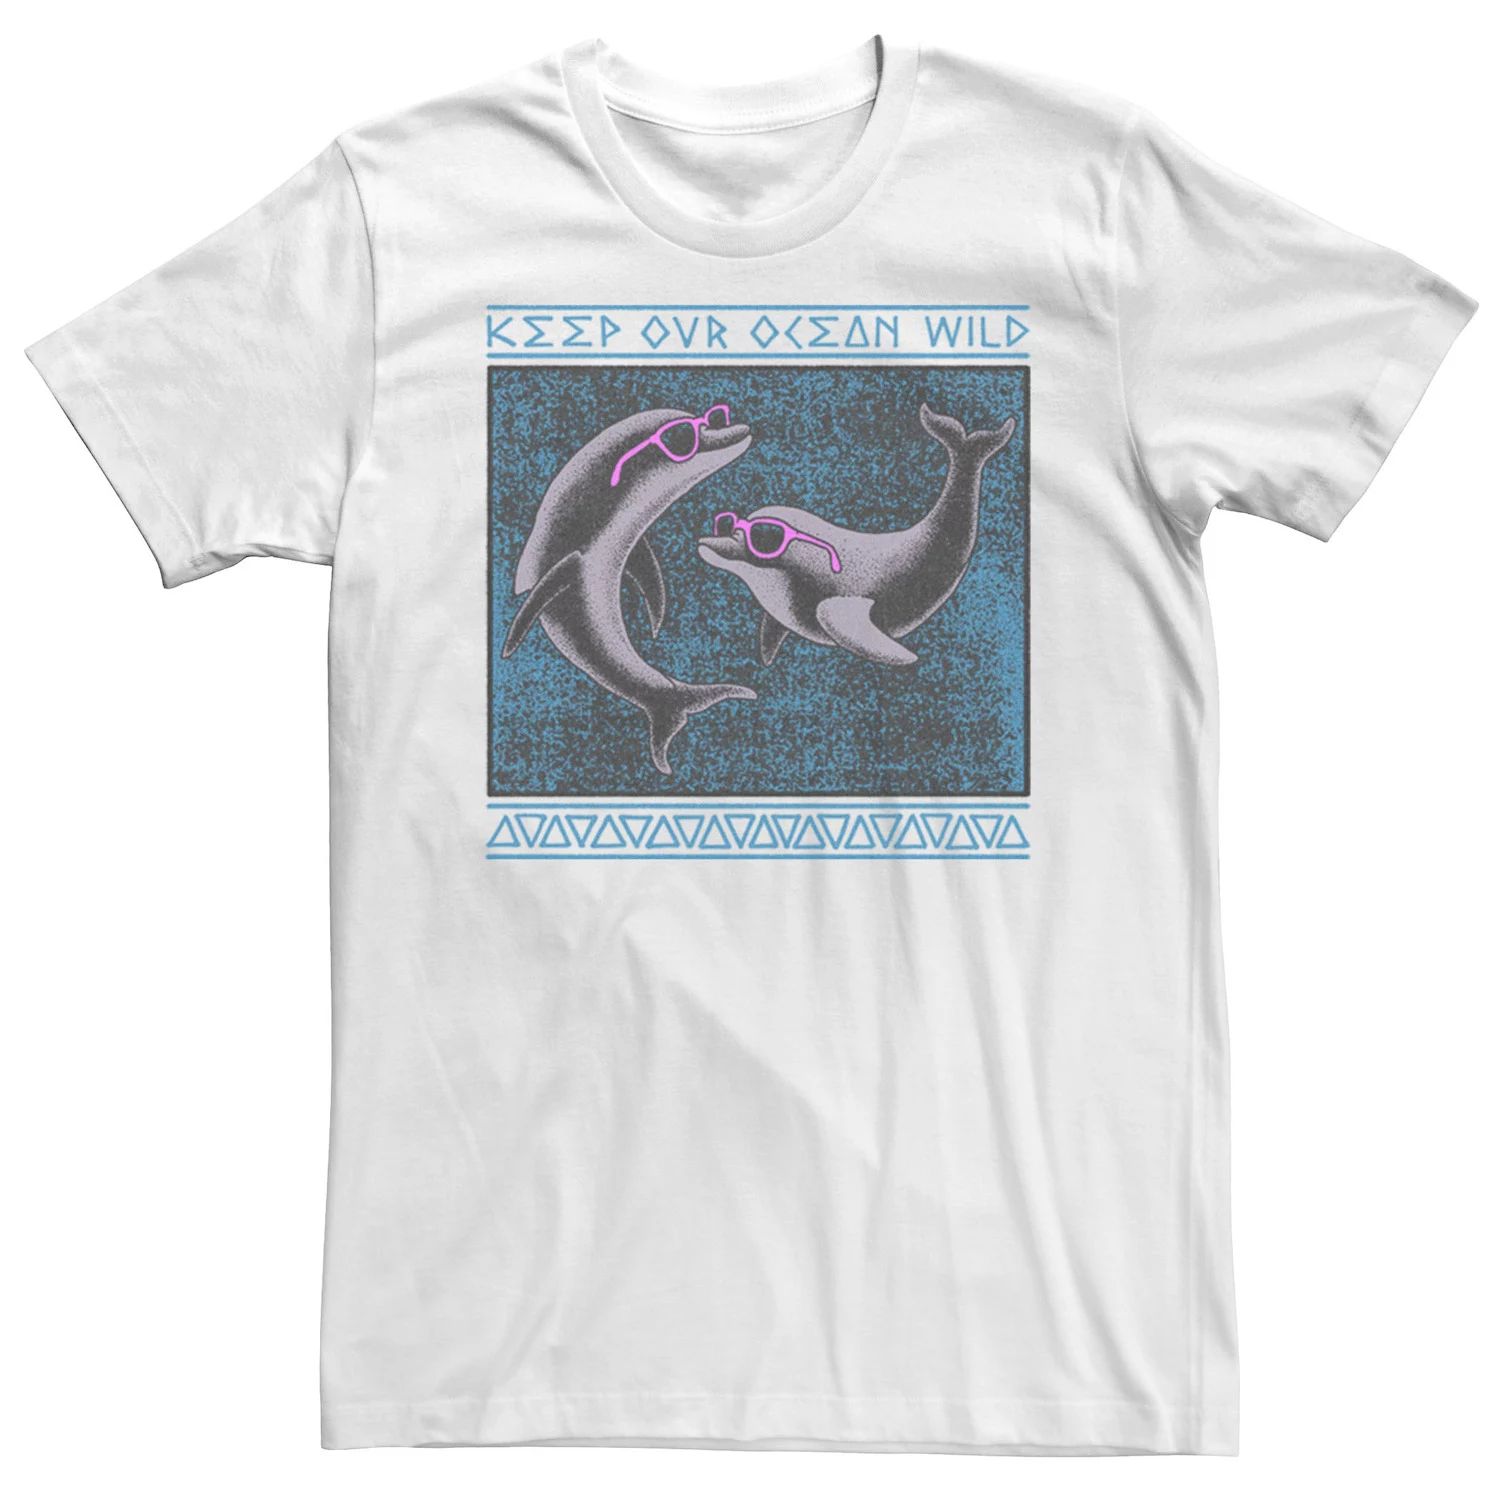 Мужская футболка с рисунком Wild Oceans Licensed Character, белый